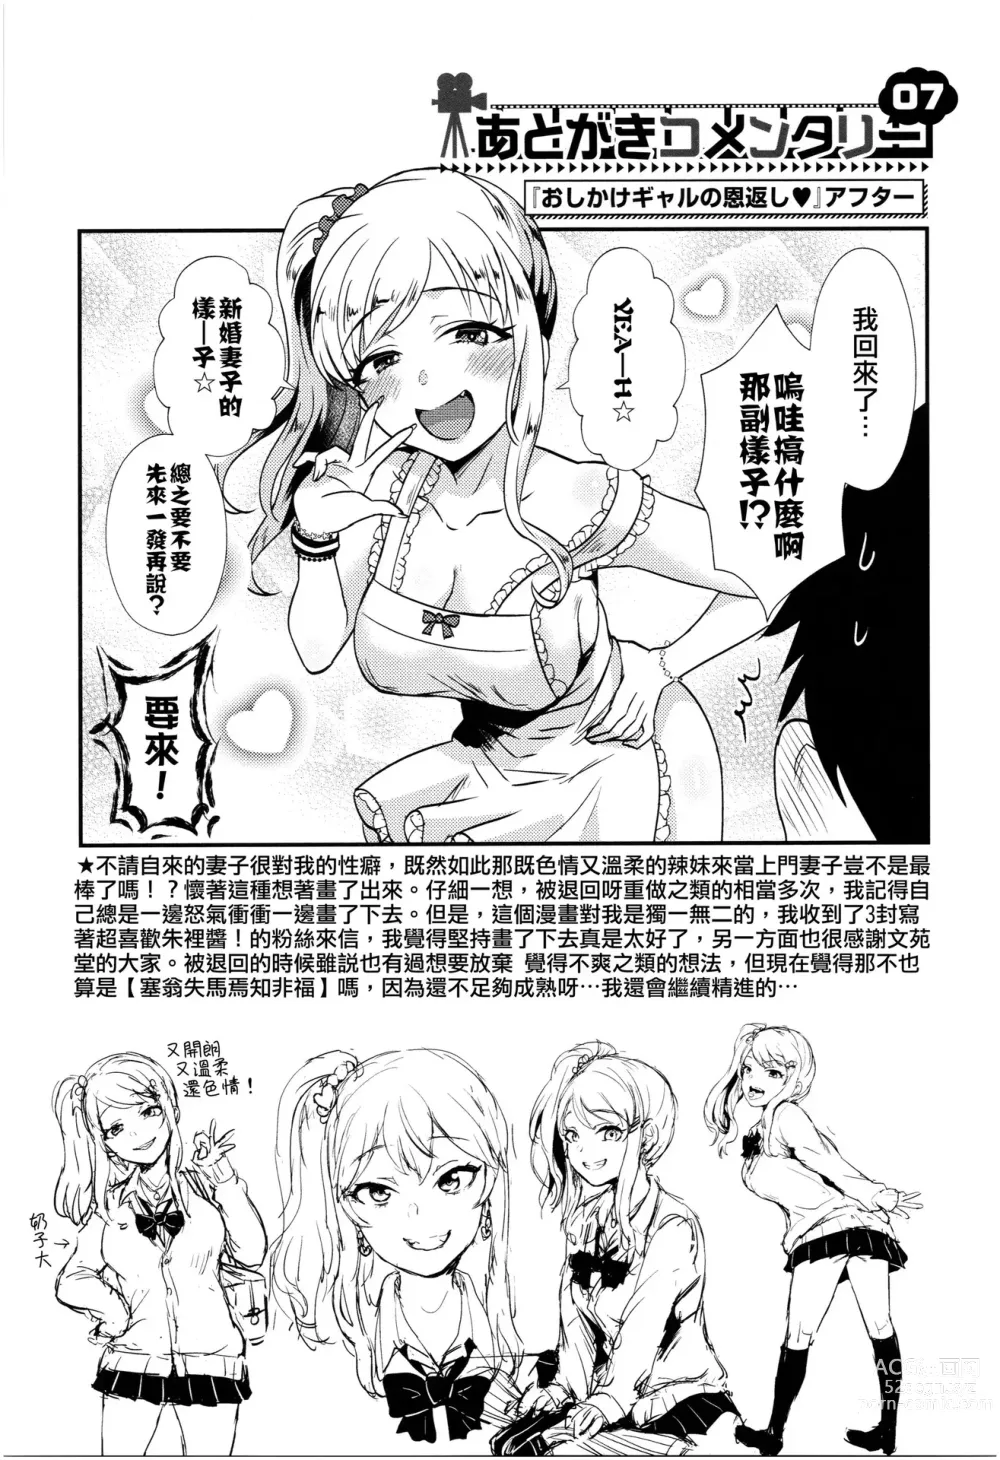 Page 192 of manga Otome Initiative - Girls Initiative (uncensored)